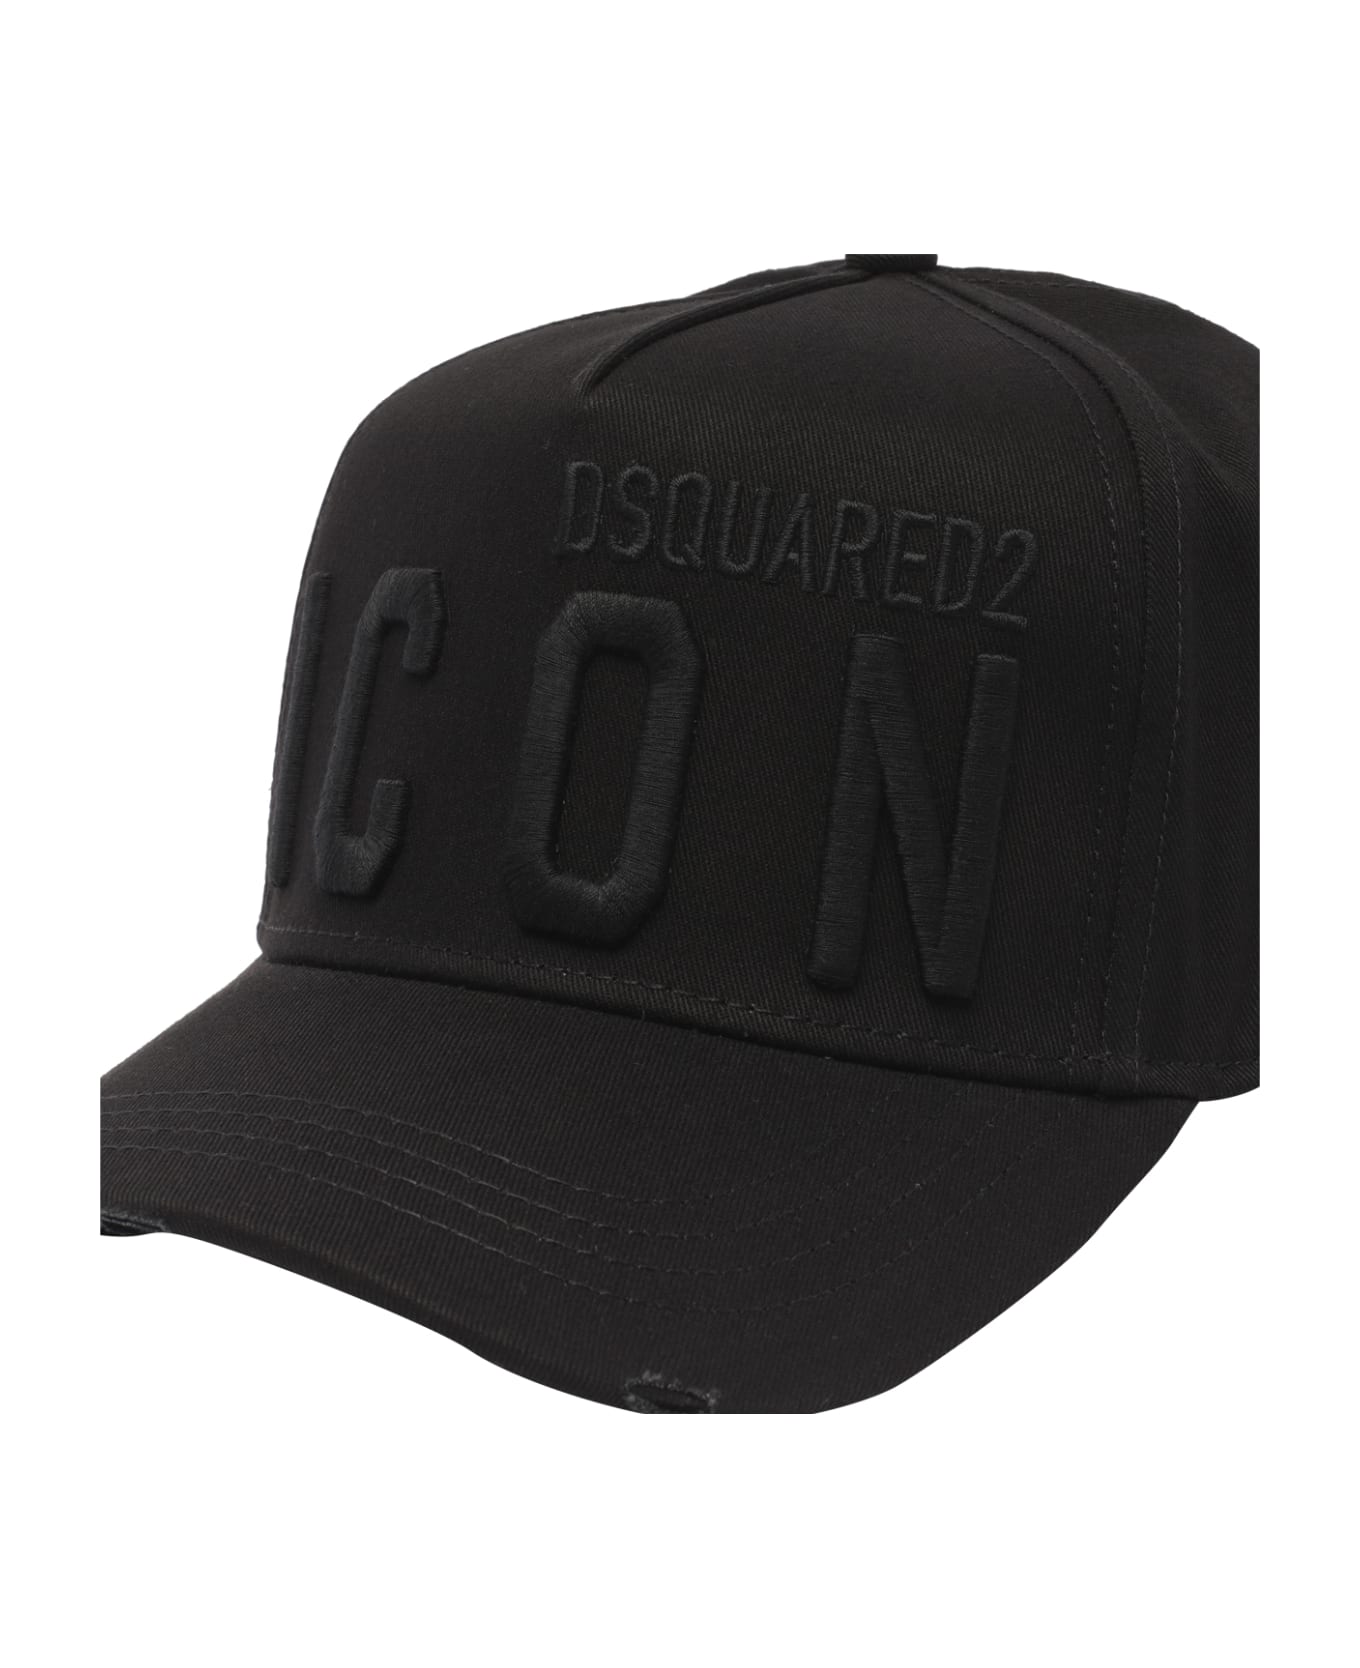 Dsquared2 Be Icon Baseball Cap - Black 帽子